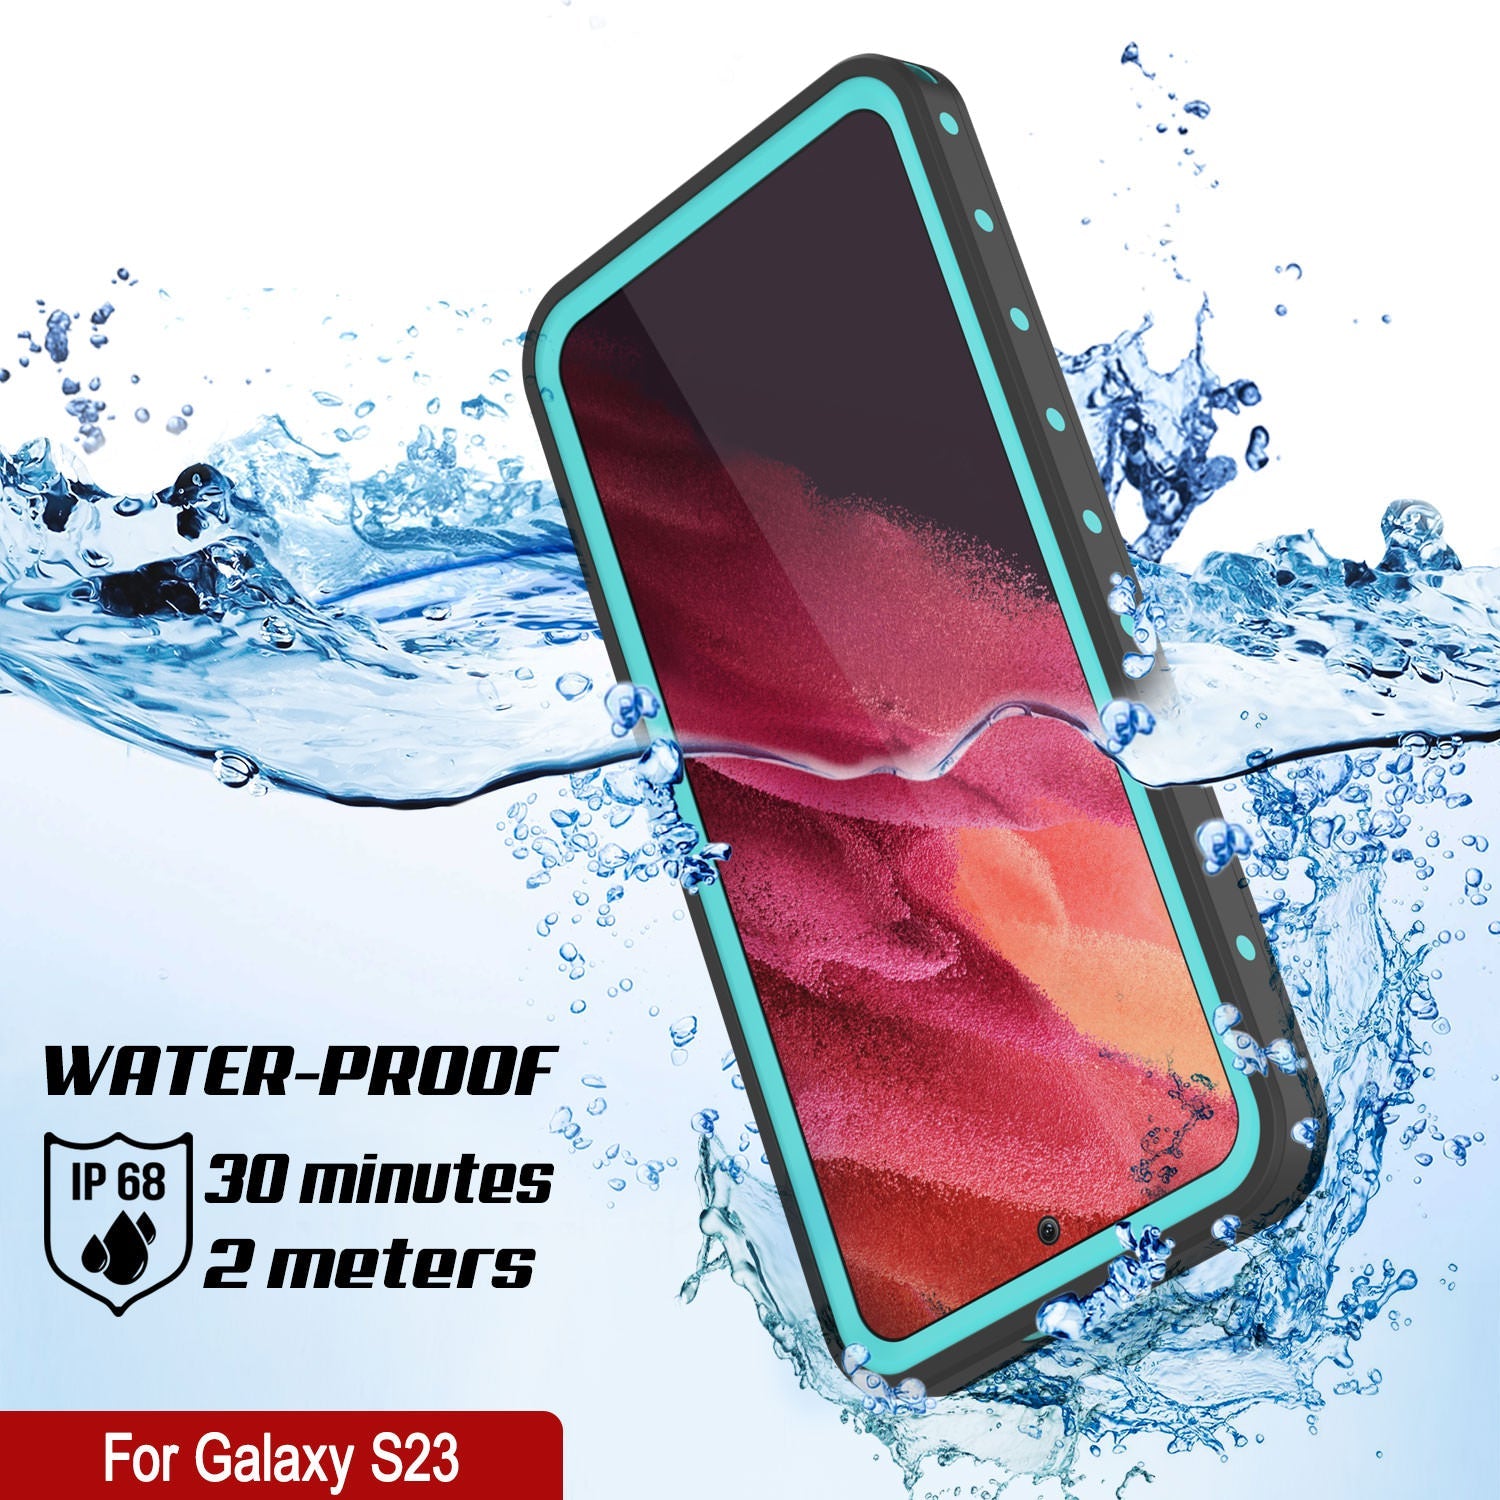 Galaxy S23 Waterproof Case PunkCase StudStar Teal Thin 6.6ft Underwater IP68 Shock/Snow Proof